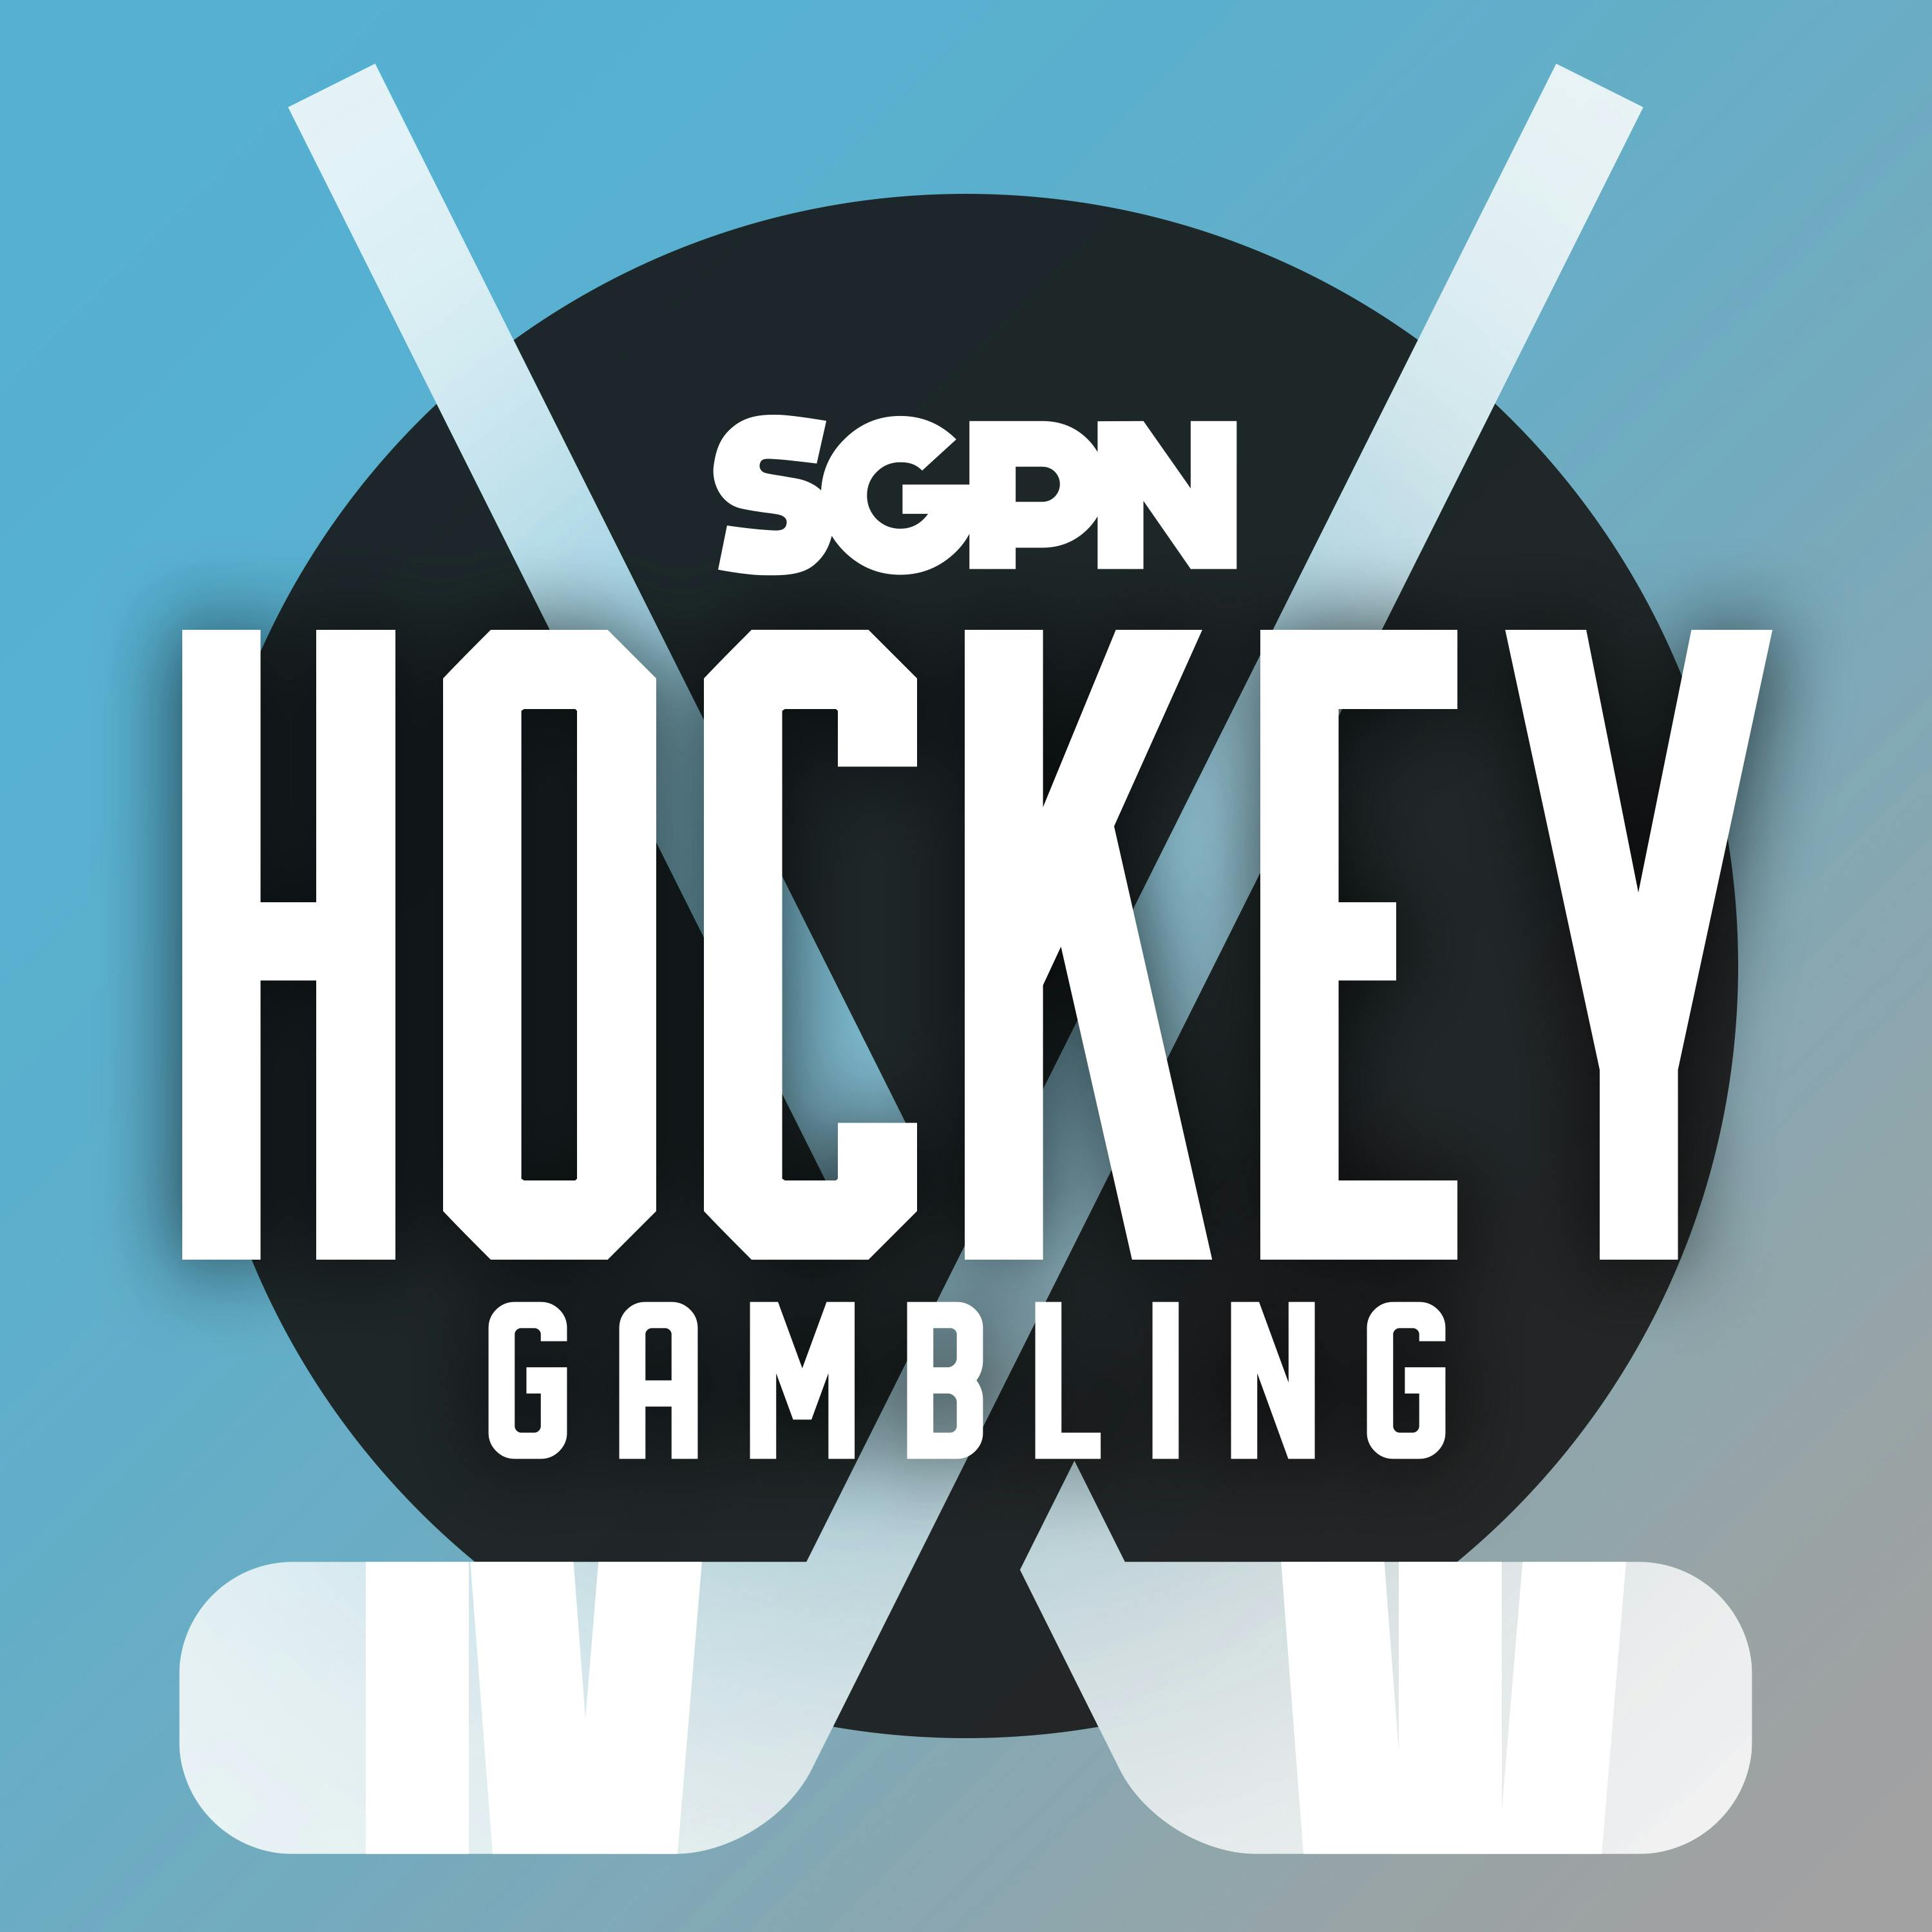 NHL Playoffs Betting Picks & Predictions - Thurs., April 25 (Ep. 351)